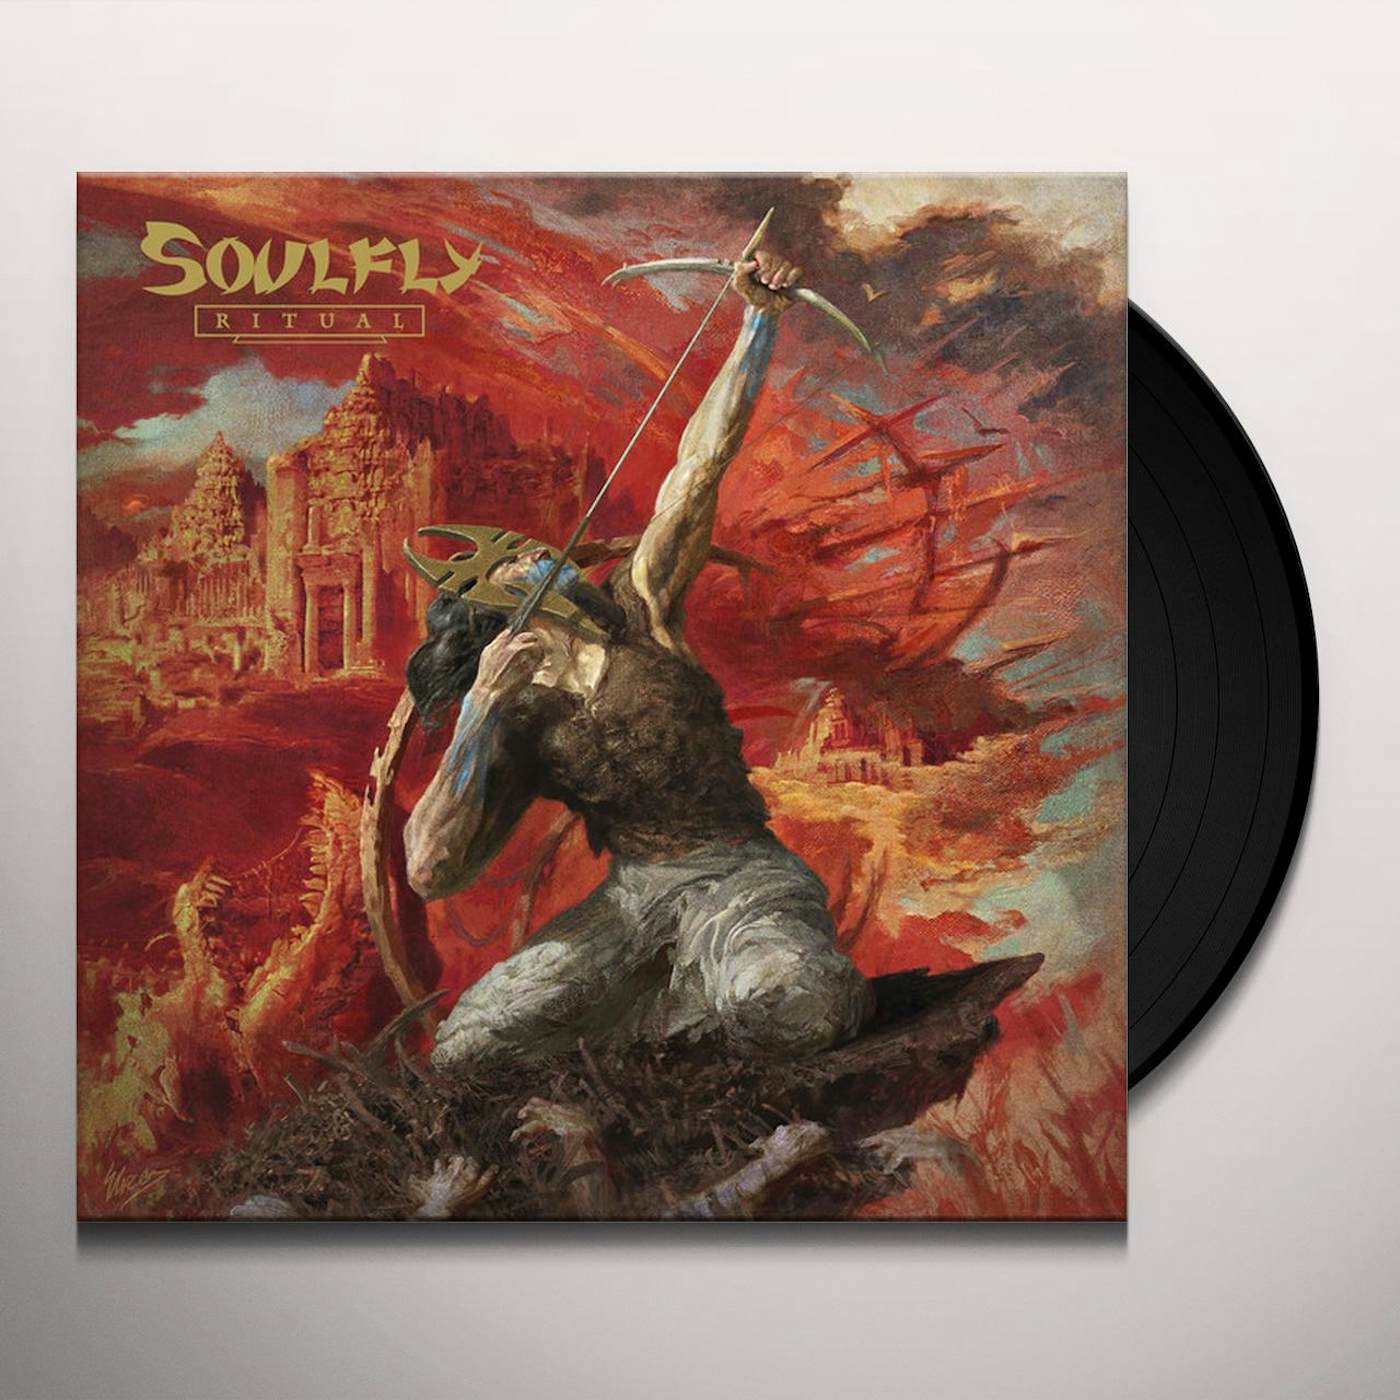 Soulfly RITUAL Vinyl Record